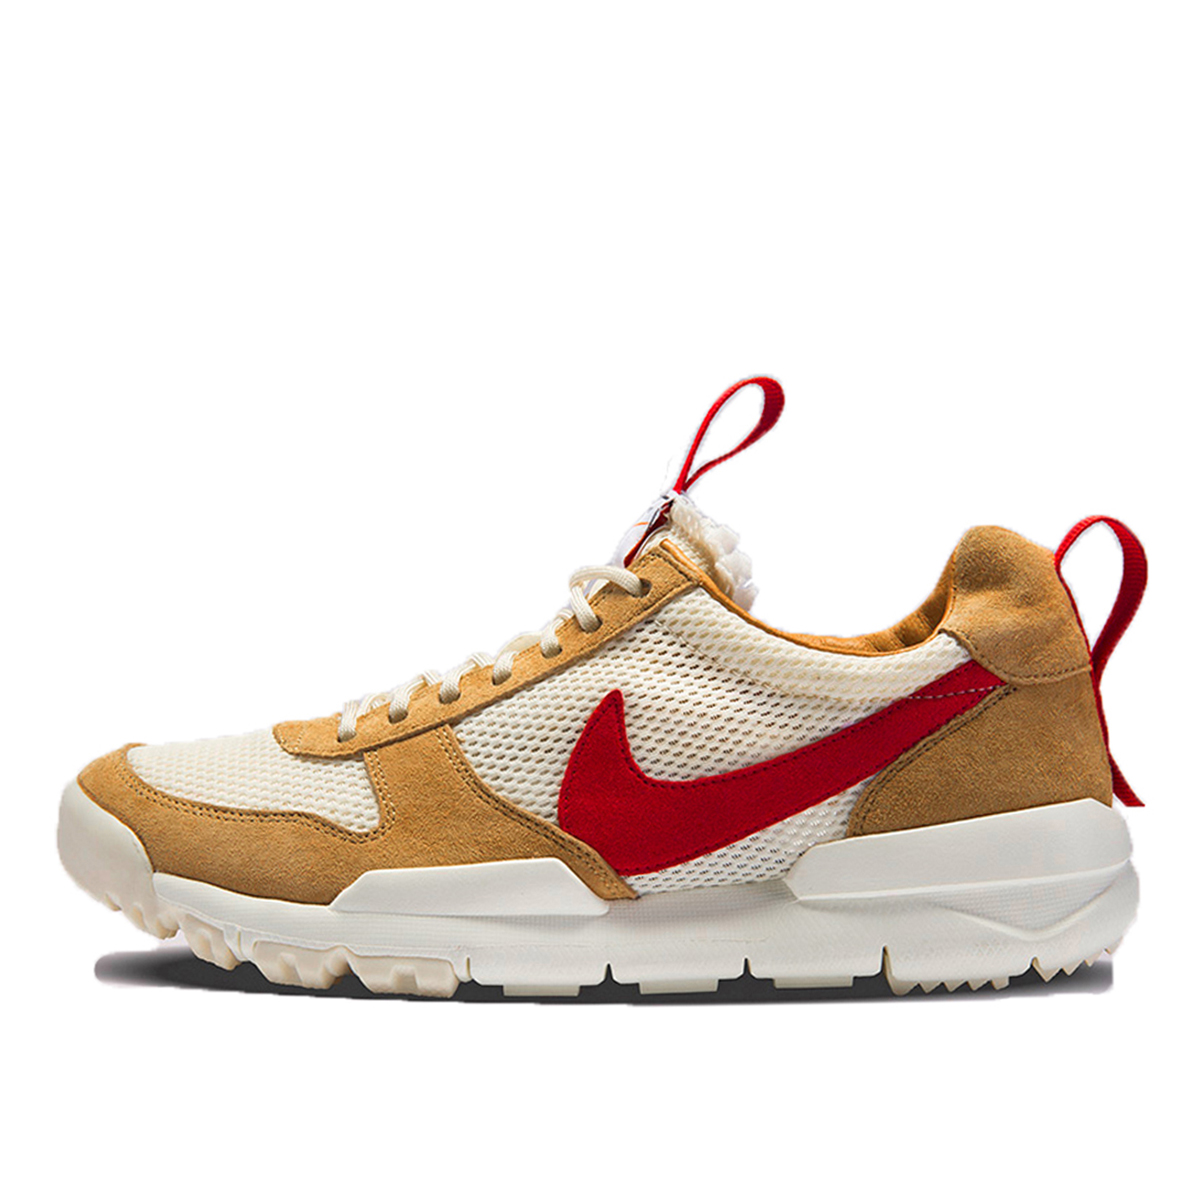 Nike Mars Yard [i] 2019 Nikecraft Tom Sachs CB Size 4C CD6722-100